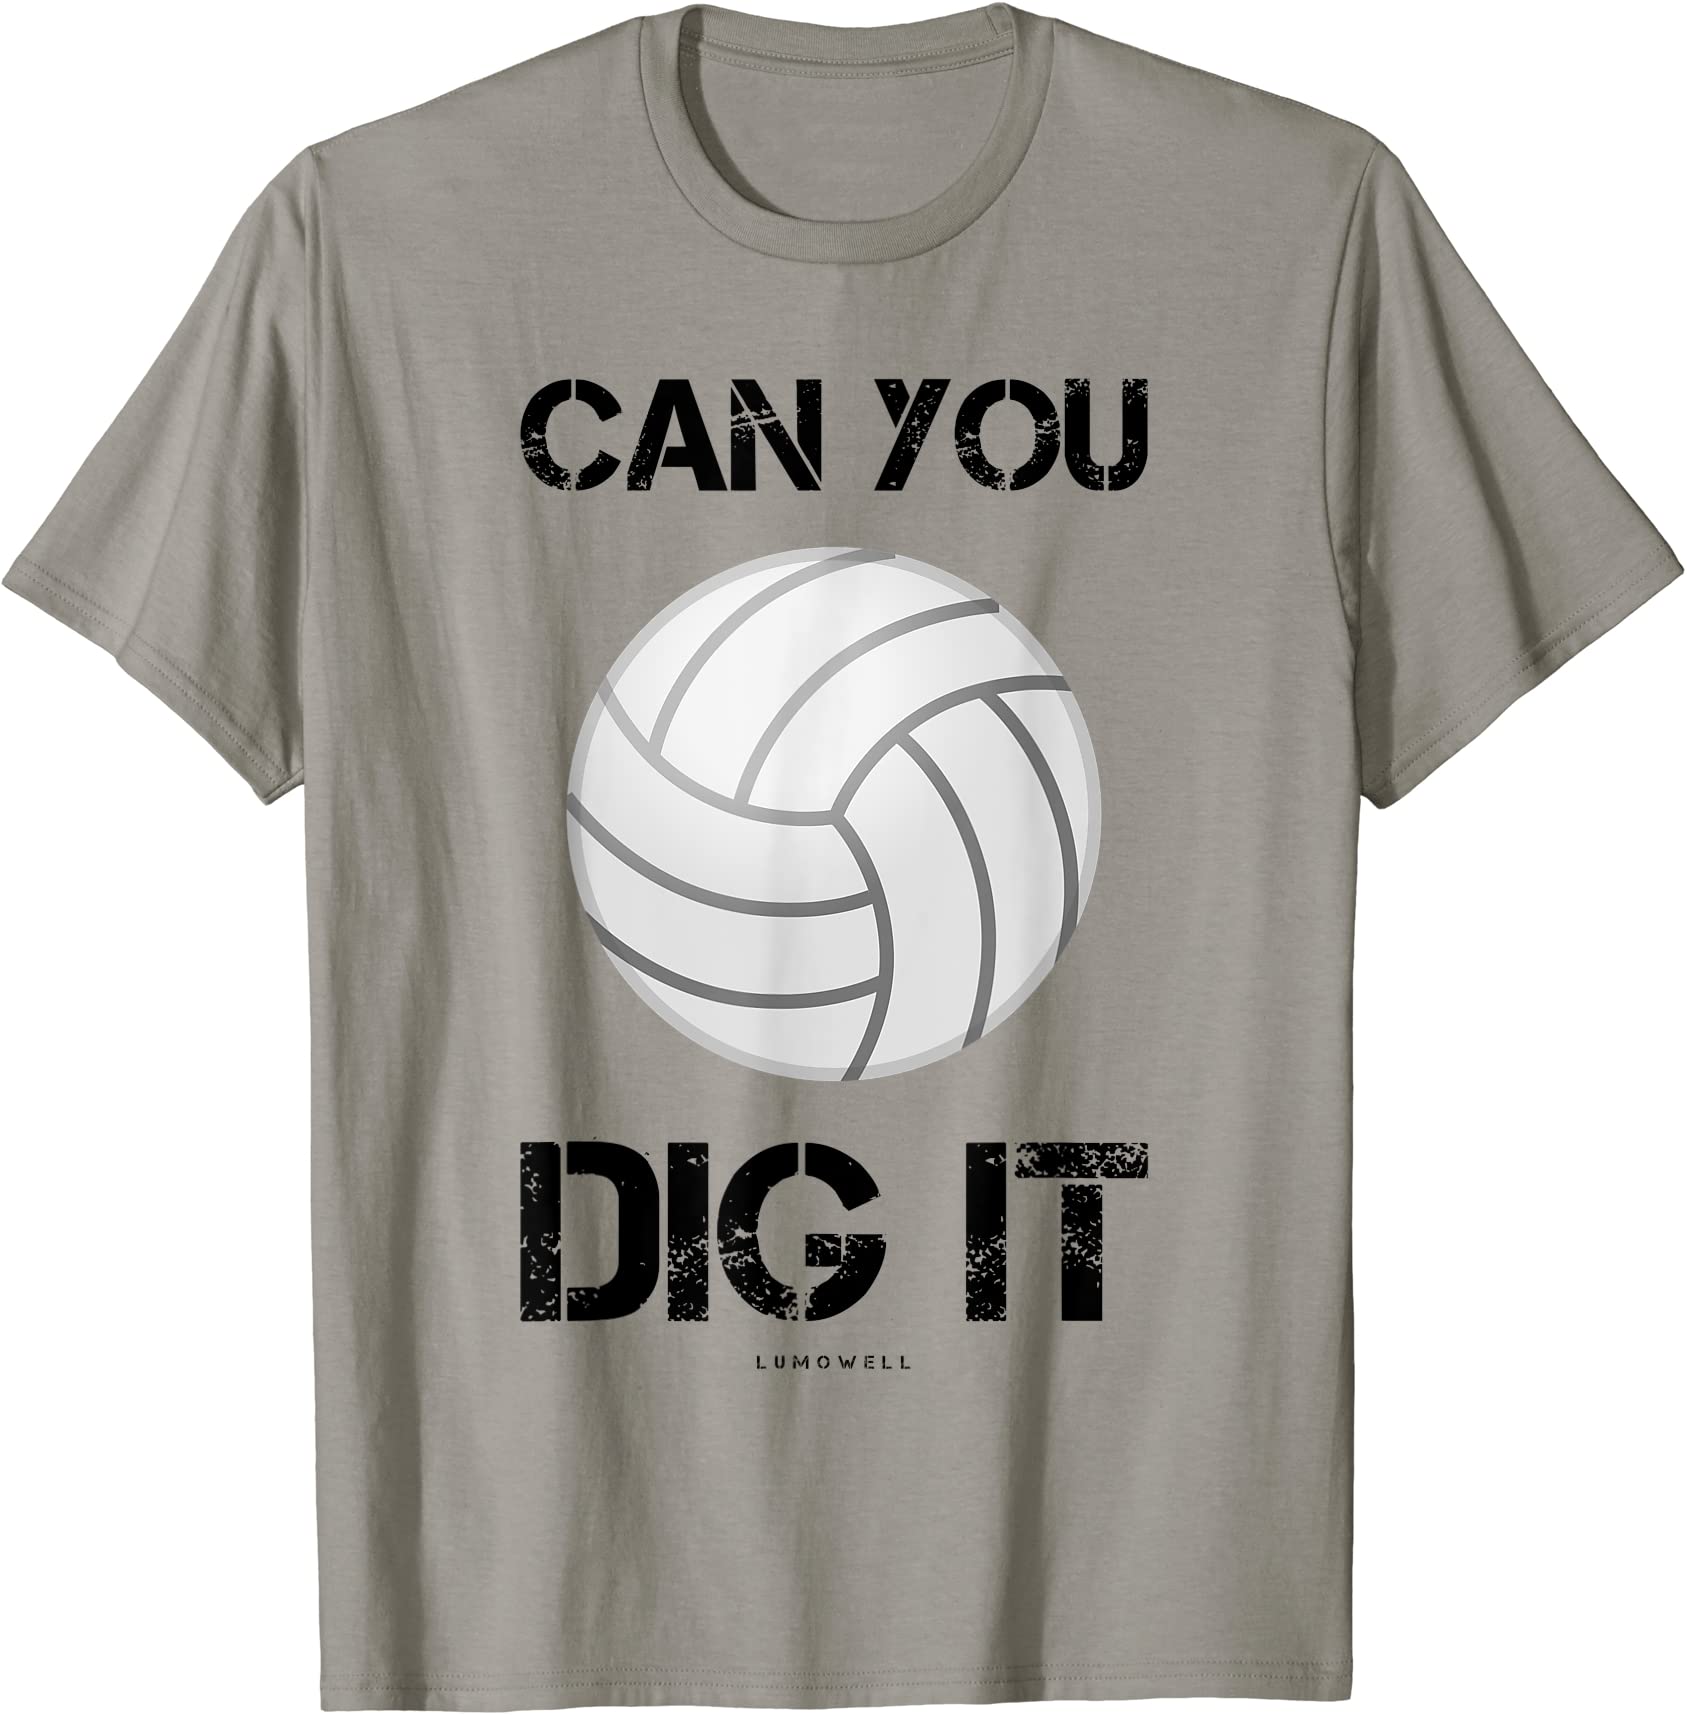 volleyball shirts you dig it volleyball tee shirt t shirt men - t-shirt designs